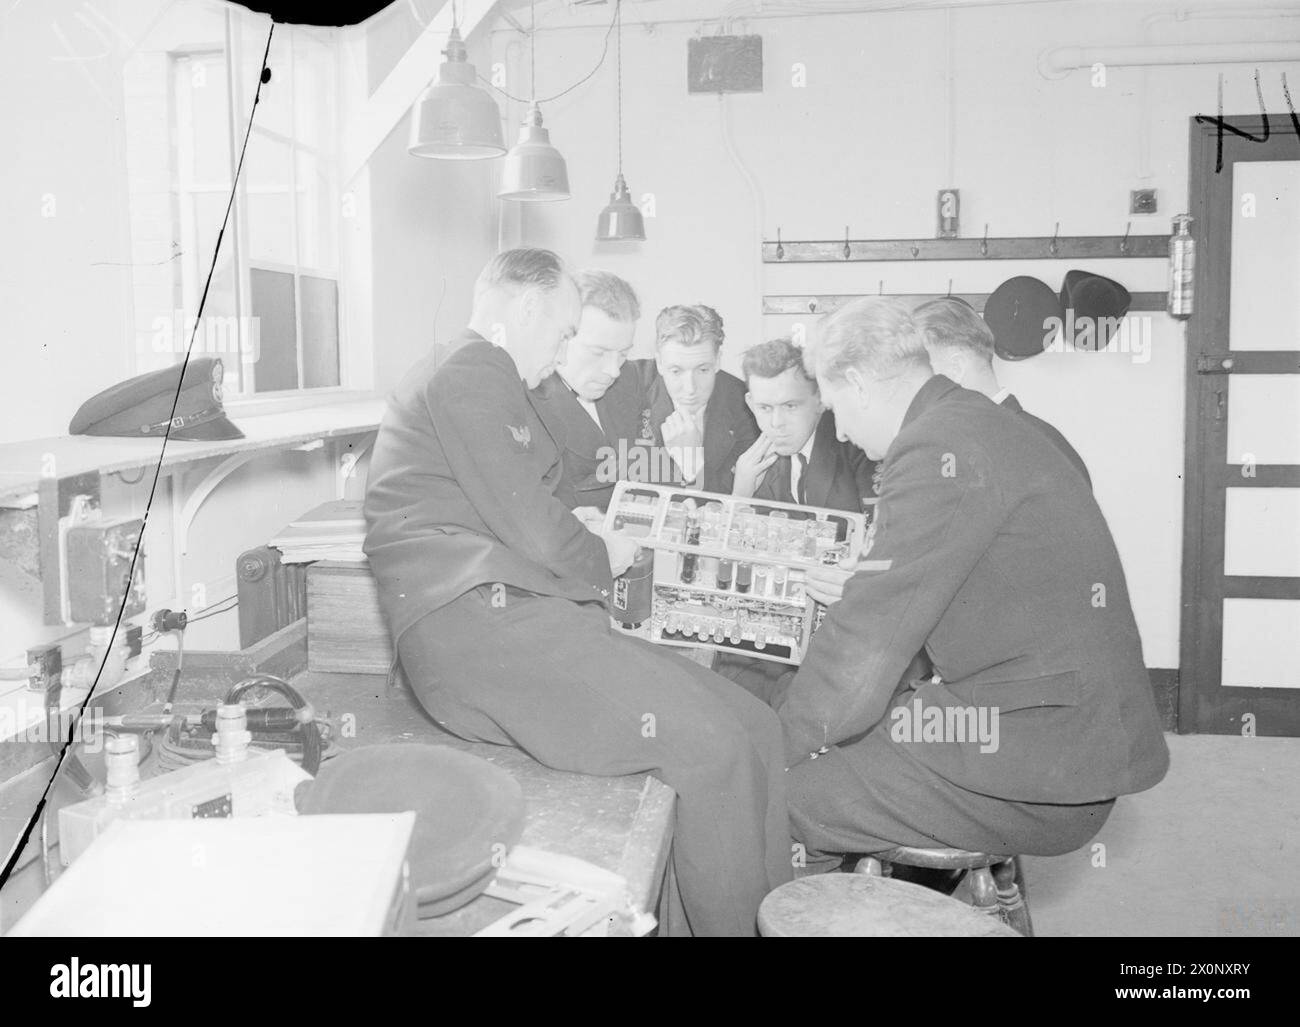 AT HMS ARIEL, ROYAL NAVAL AIR RADIO MECHANICS TRAINING ESTABLISHMENT. 27 JUNE 1945, WARRINGTON, LANCS, RADAR AND RADIO EQUIPMENT AT HMS ARIEL. - Classroom Training Stock Photo